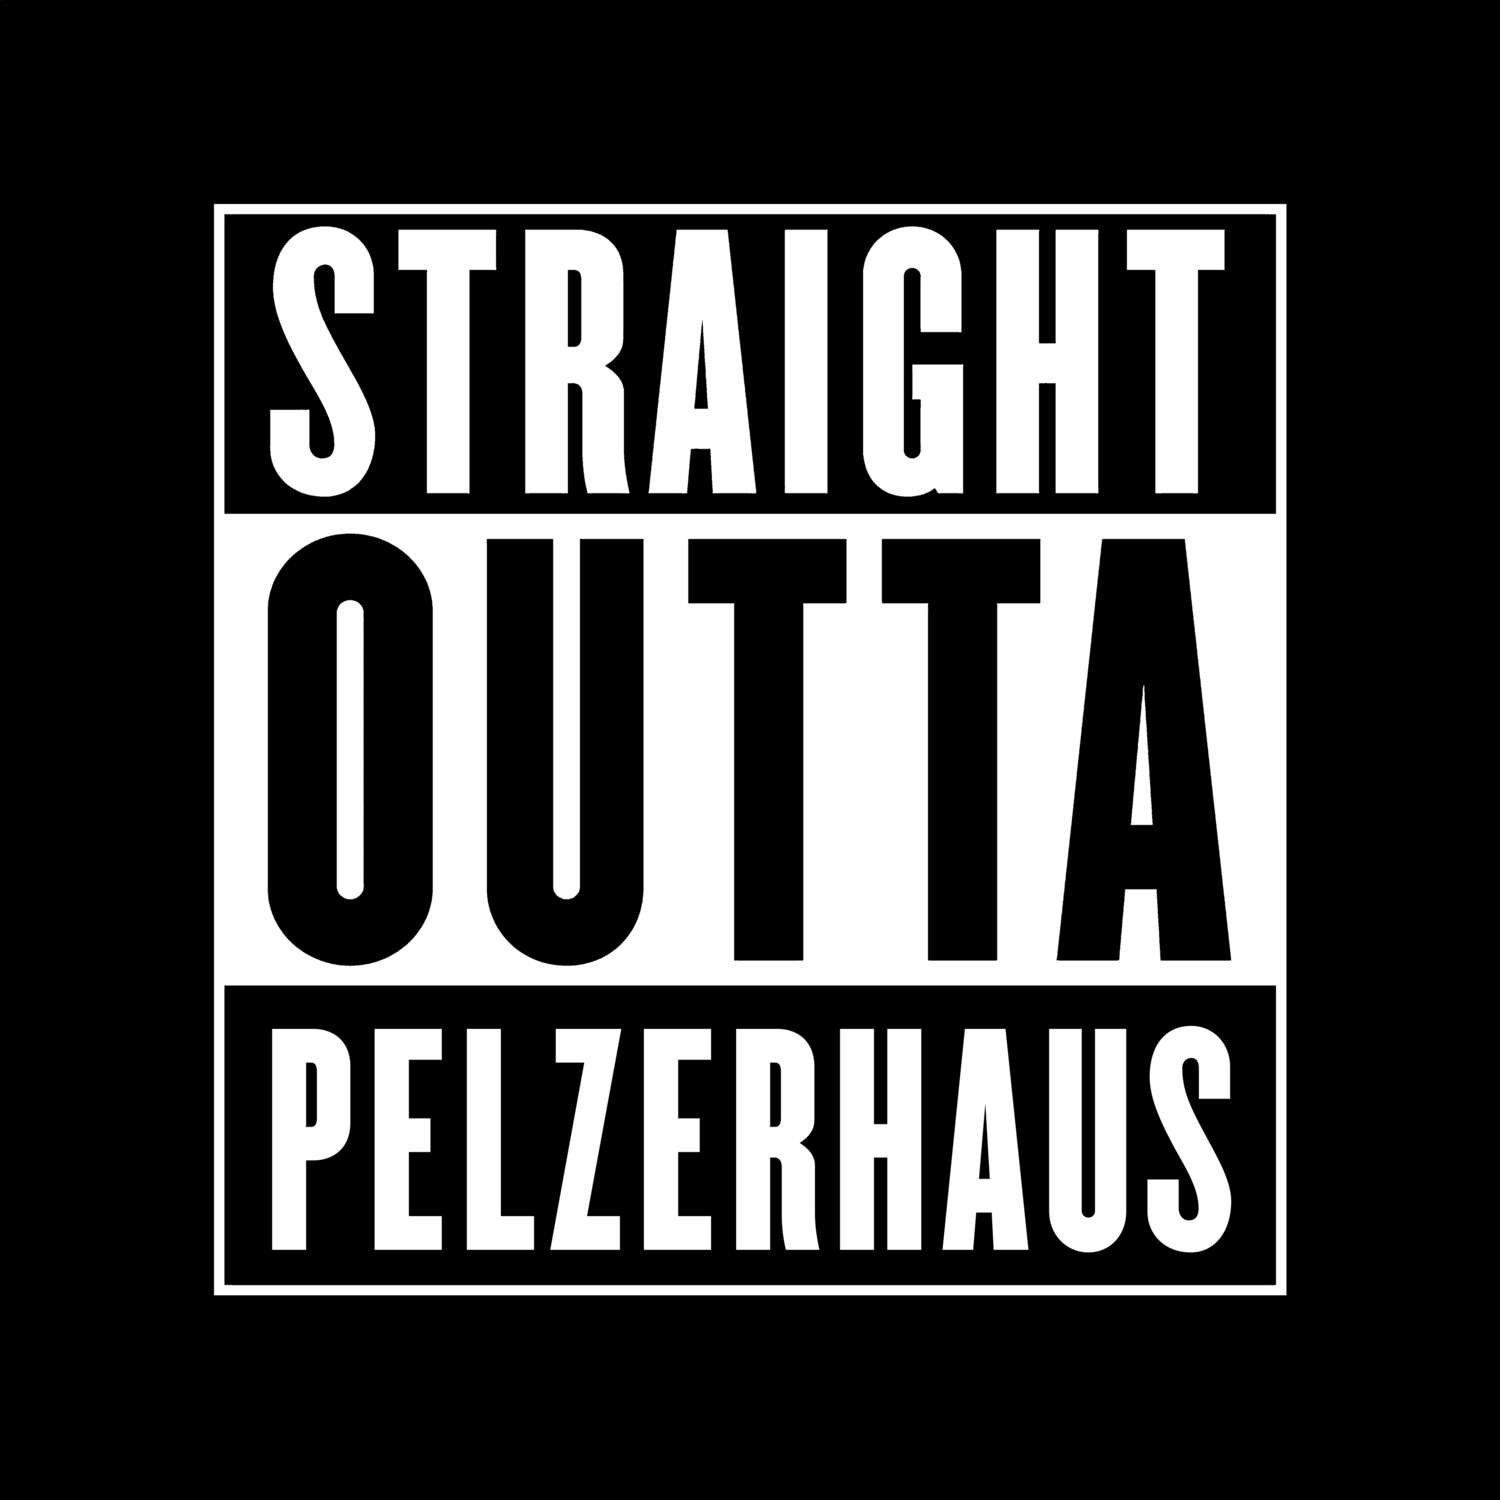 Pelzerhaus T-Shirt »Straight Outta«